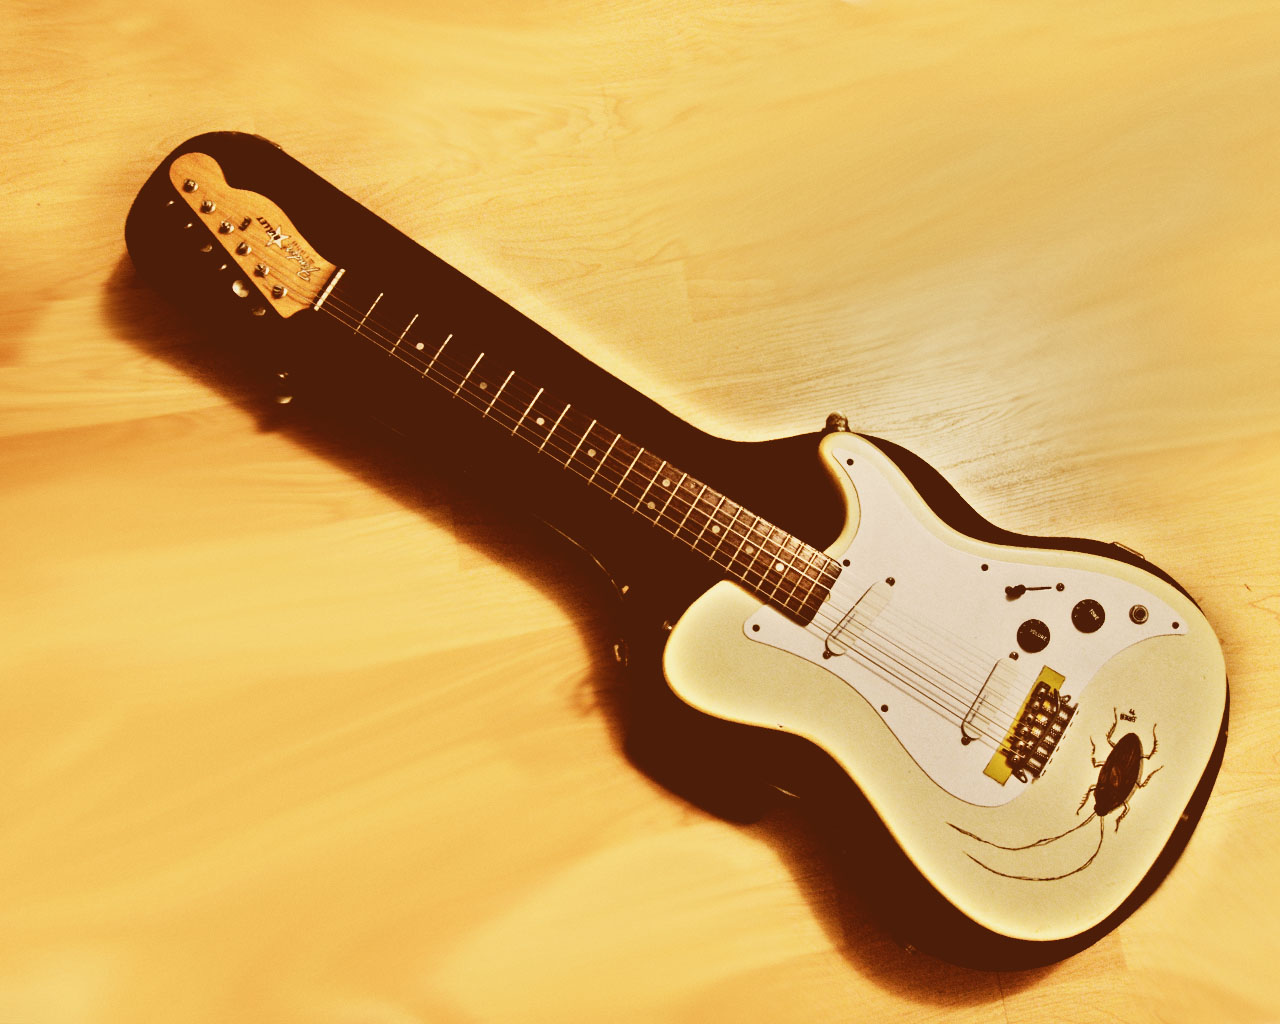 Fender Guitar Wallpapers For Desktop 2106 Hd Wallpapers in Music